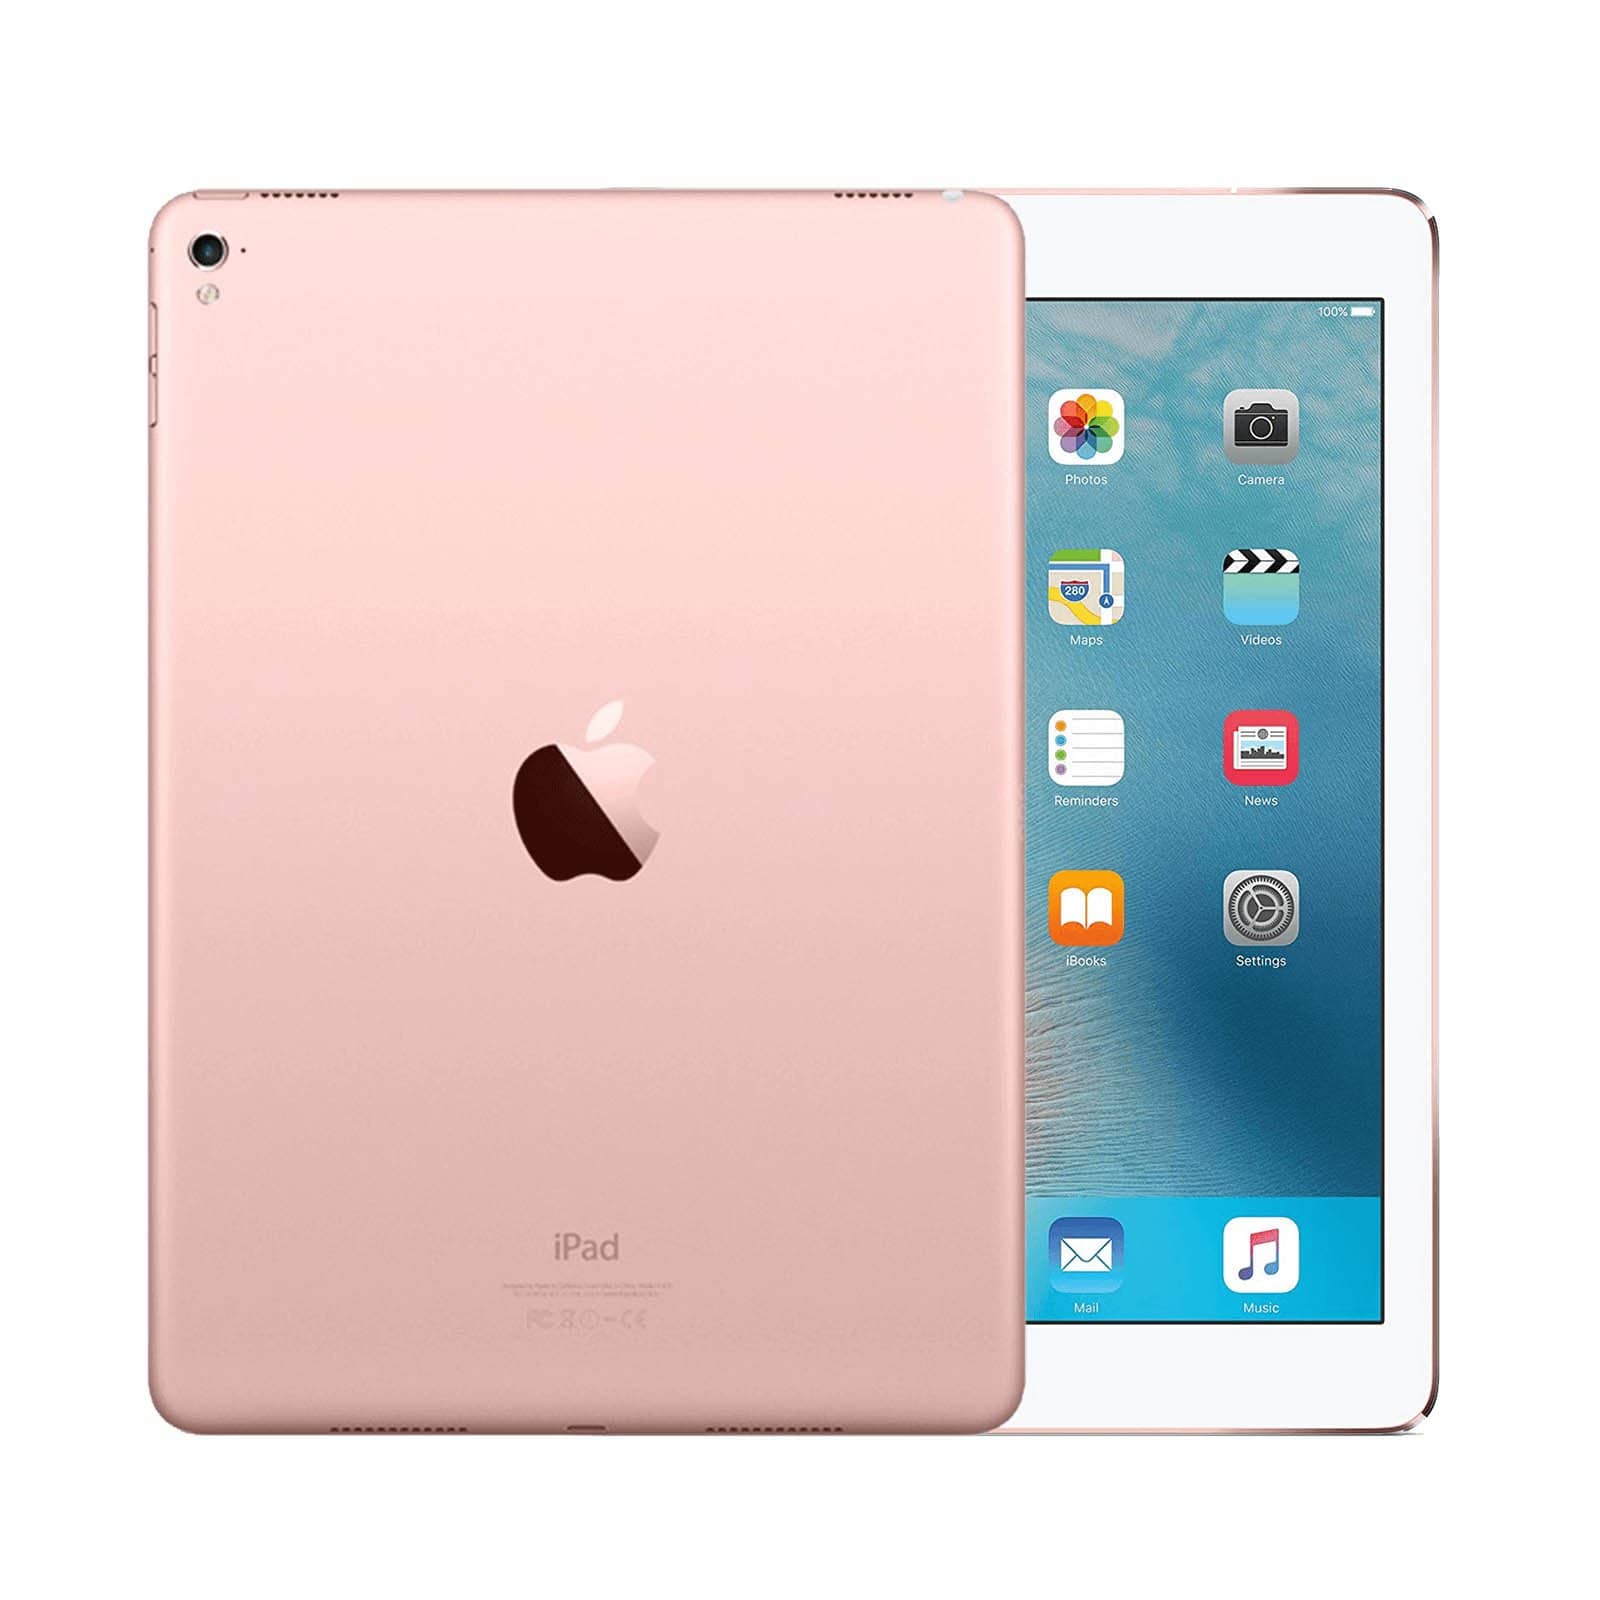 iPad Pro 9.7 Inch 256GB Rose Gold Good - WiFi 256GB Rose Gold Good